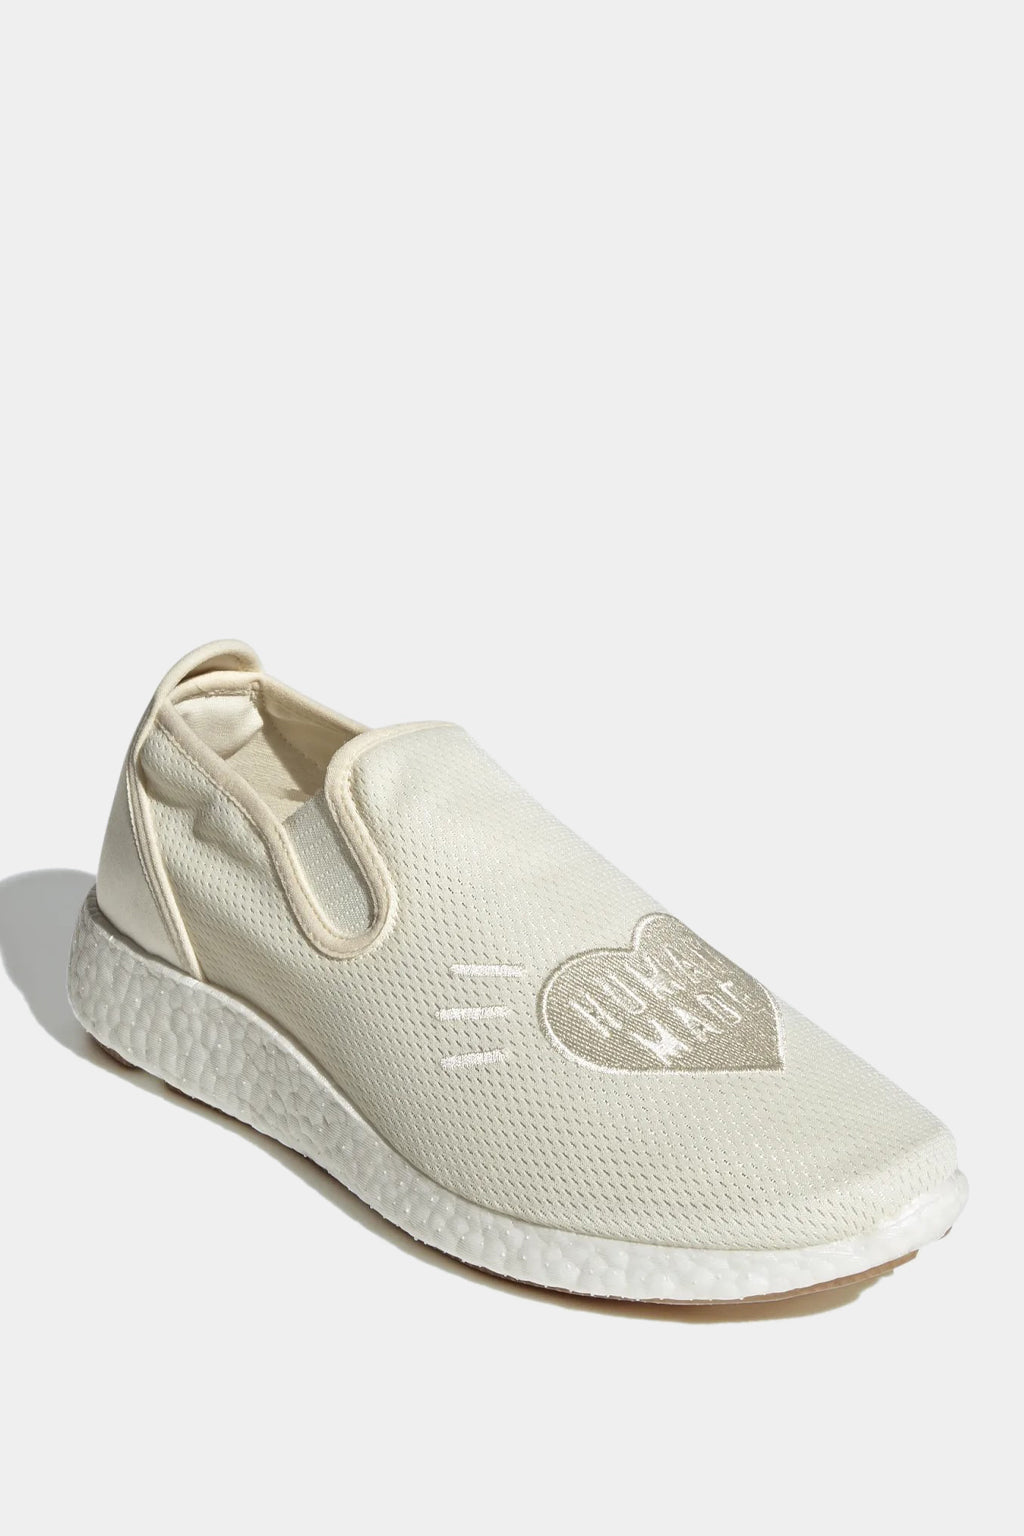 Adidas Originals - Human Made Pure Slip-on Shoes